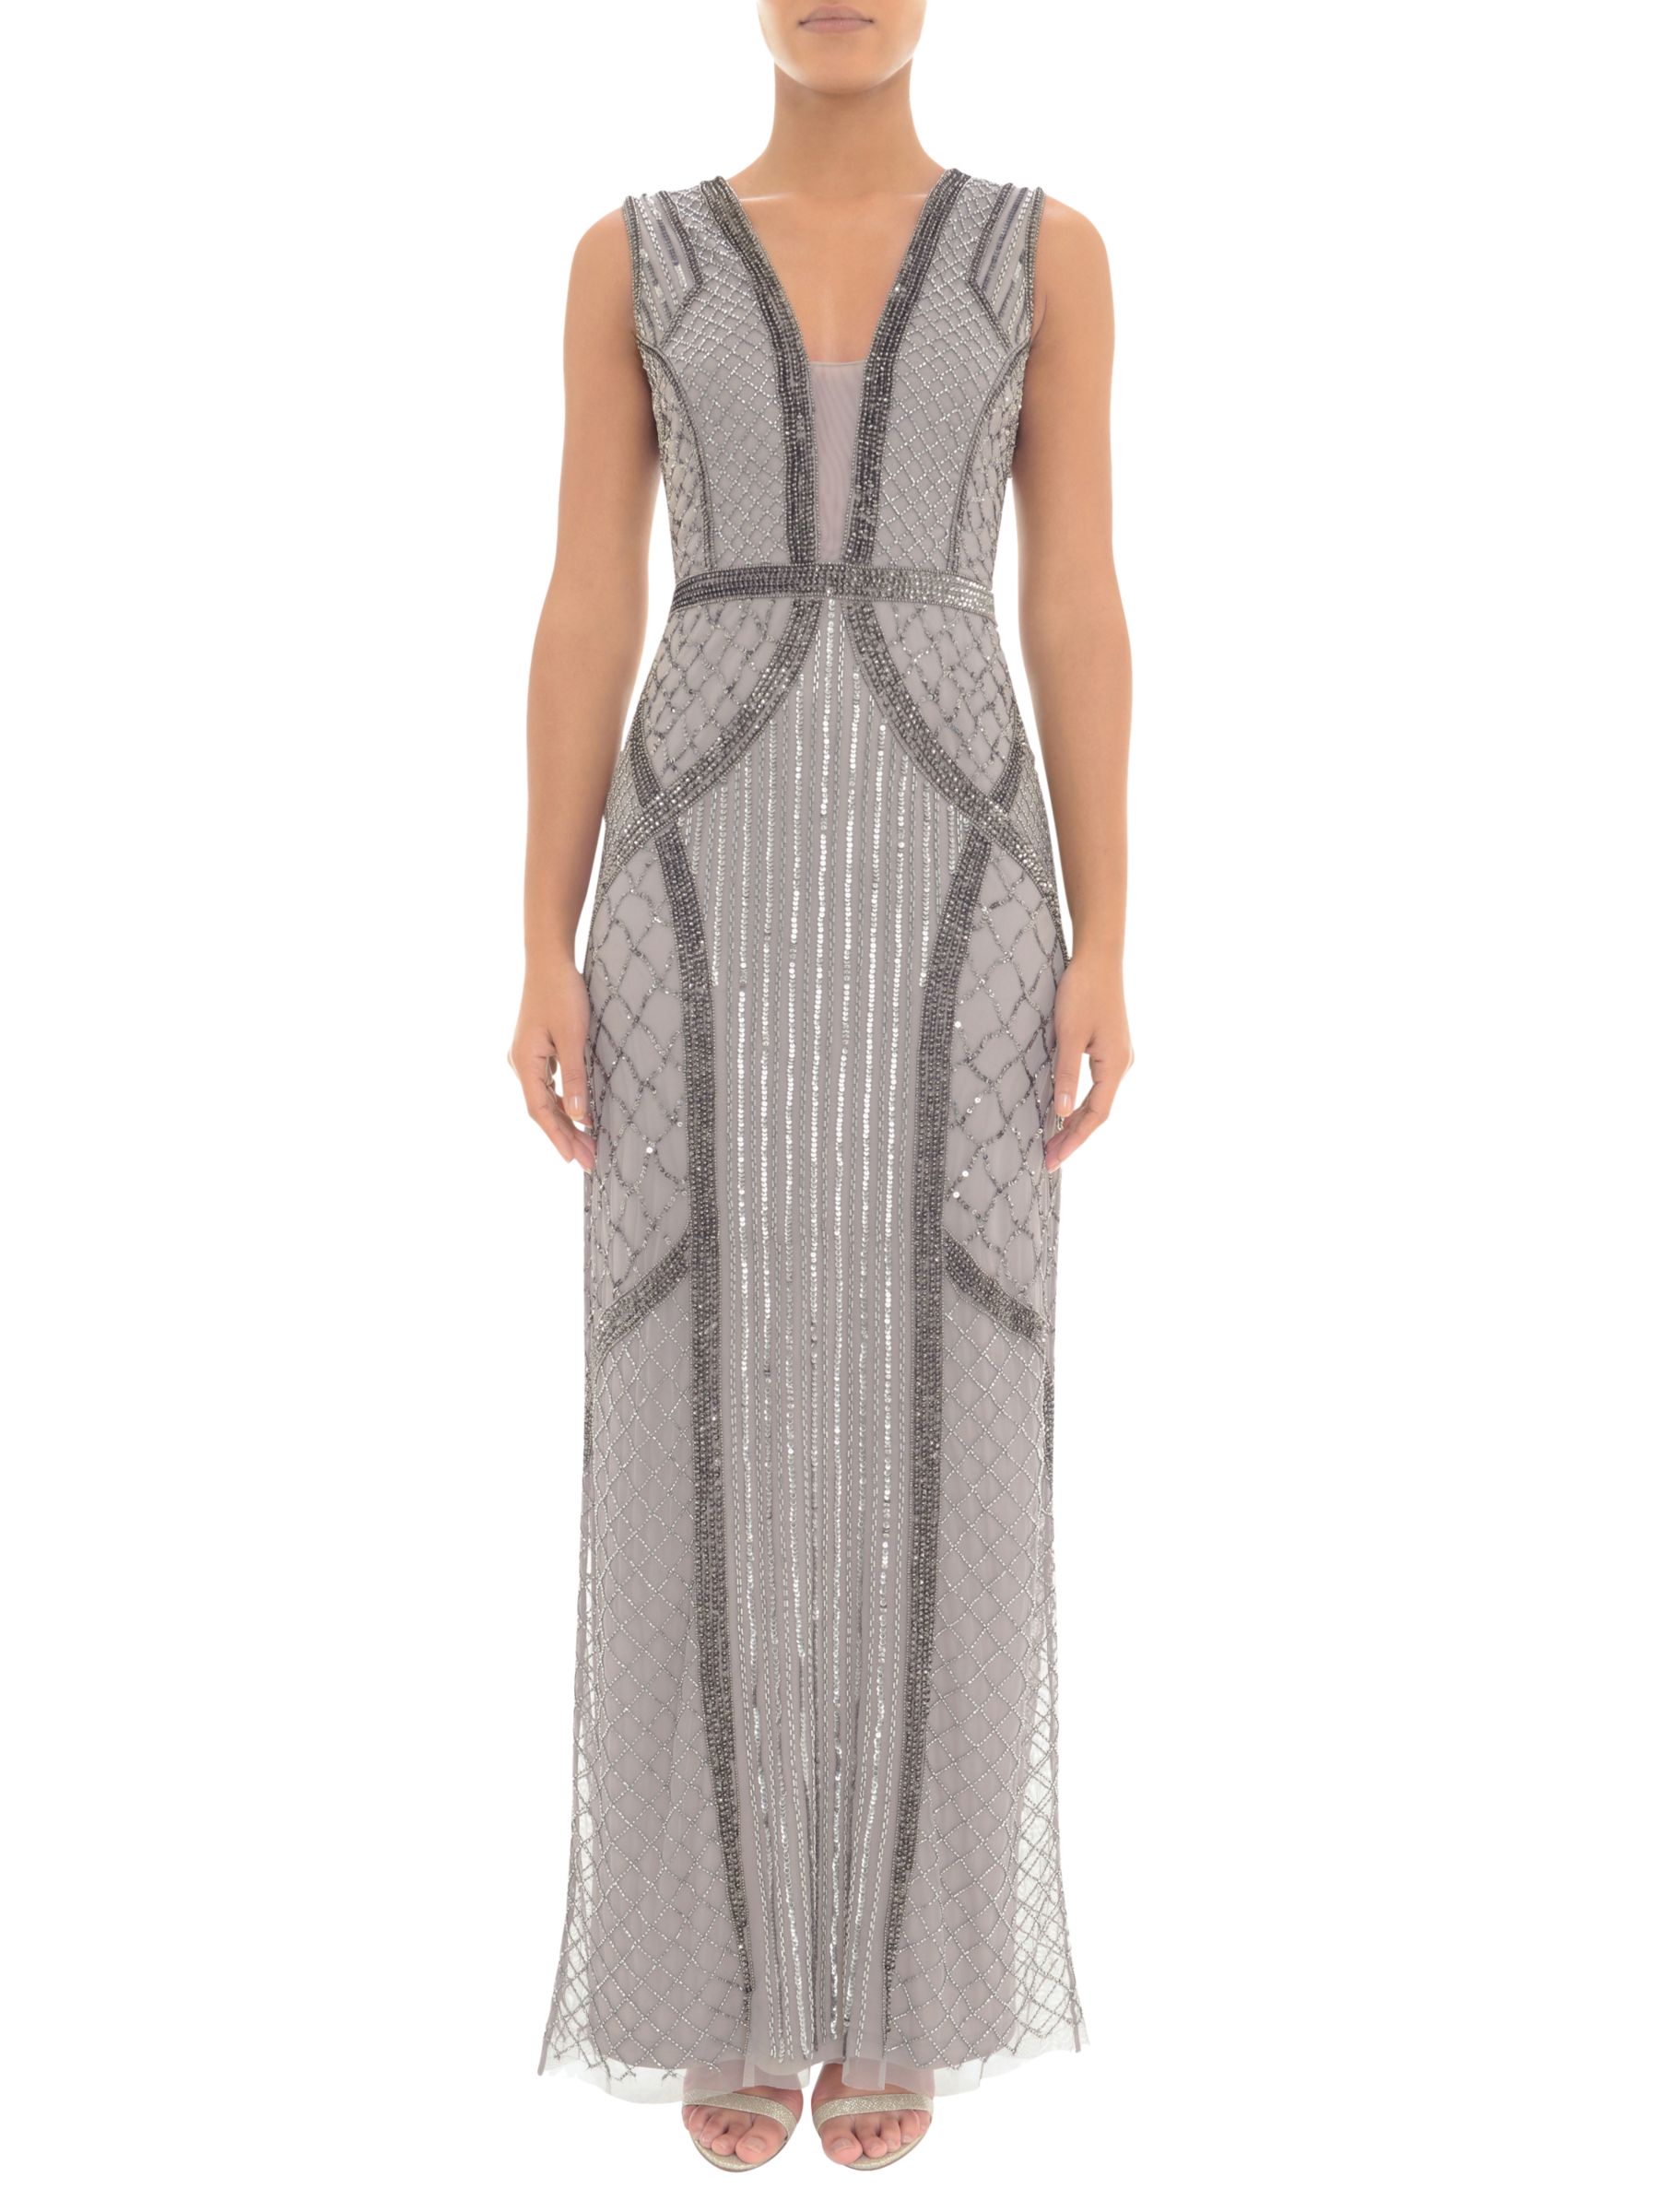 Adrianna Papell Beaded Column Dress, Platinum